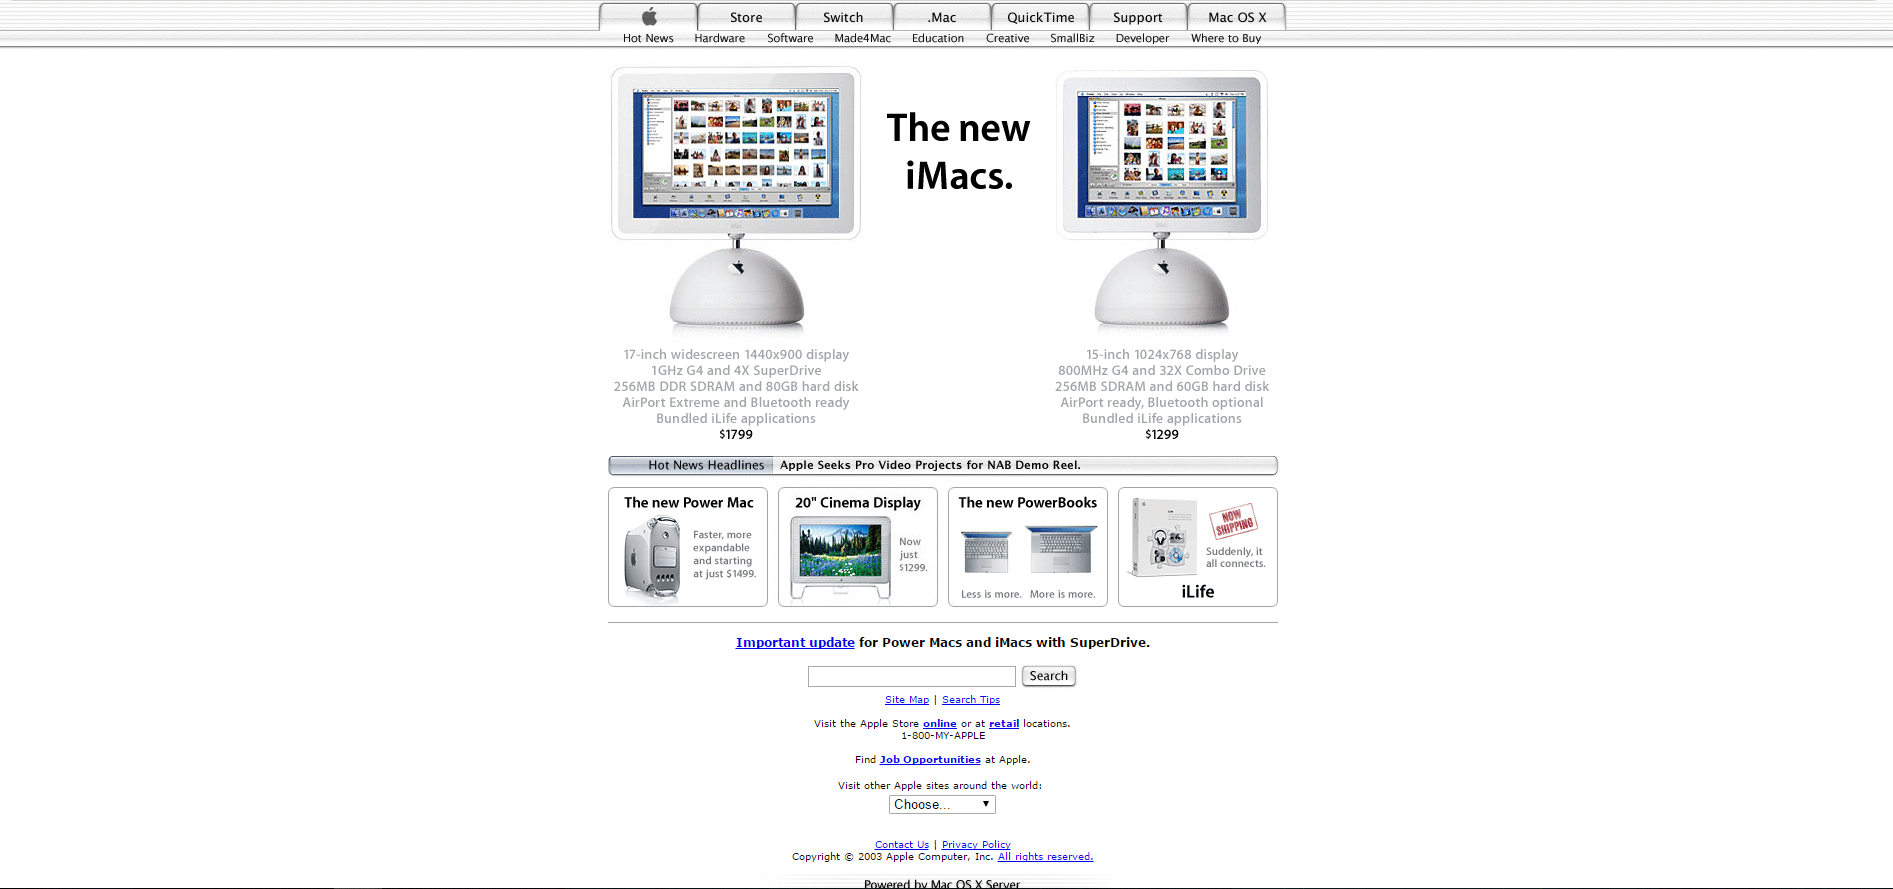 apple.com Website Design in 2003